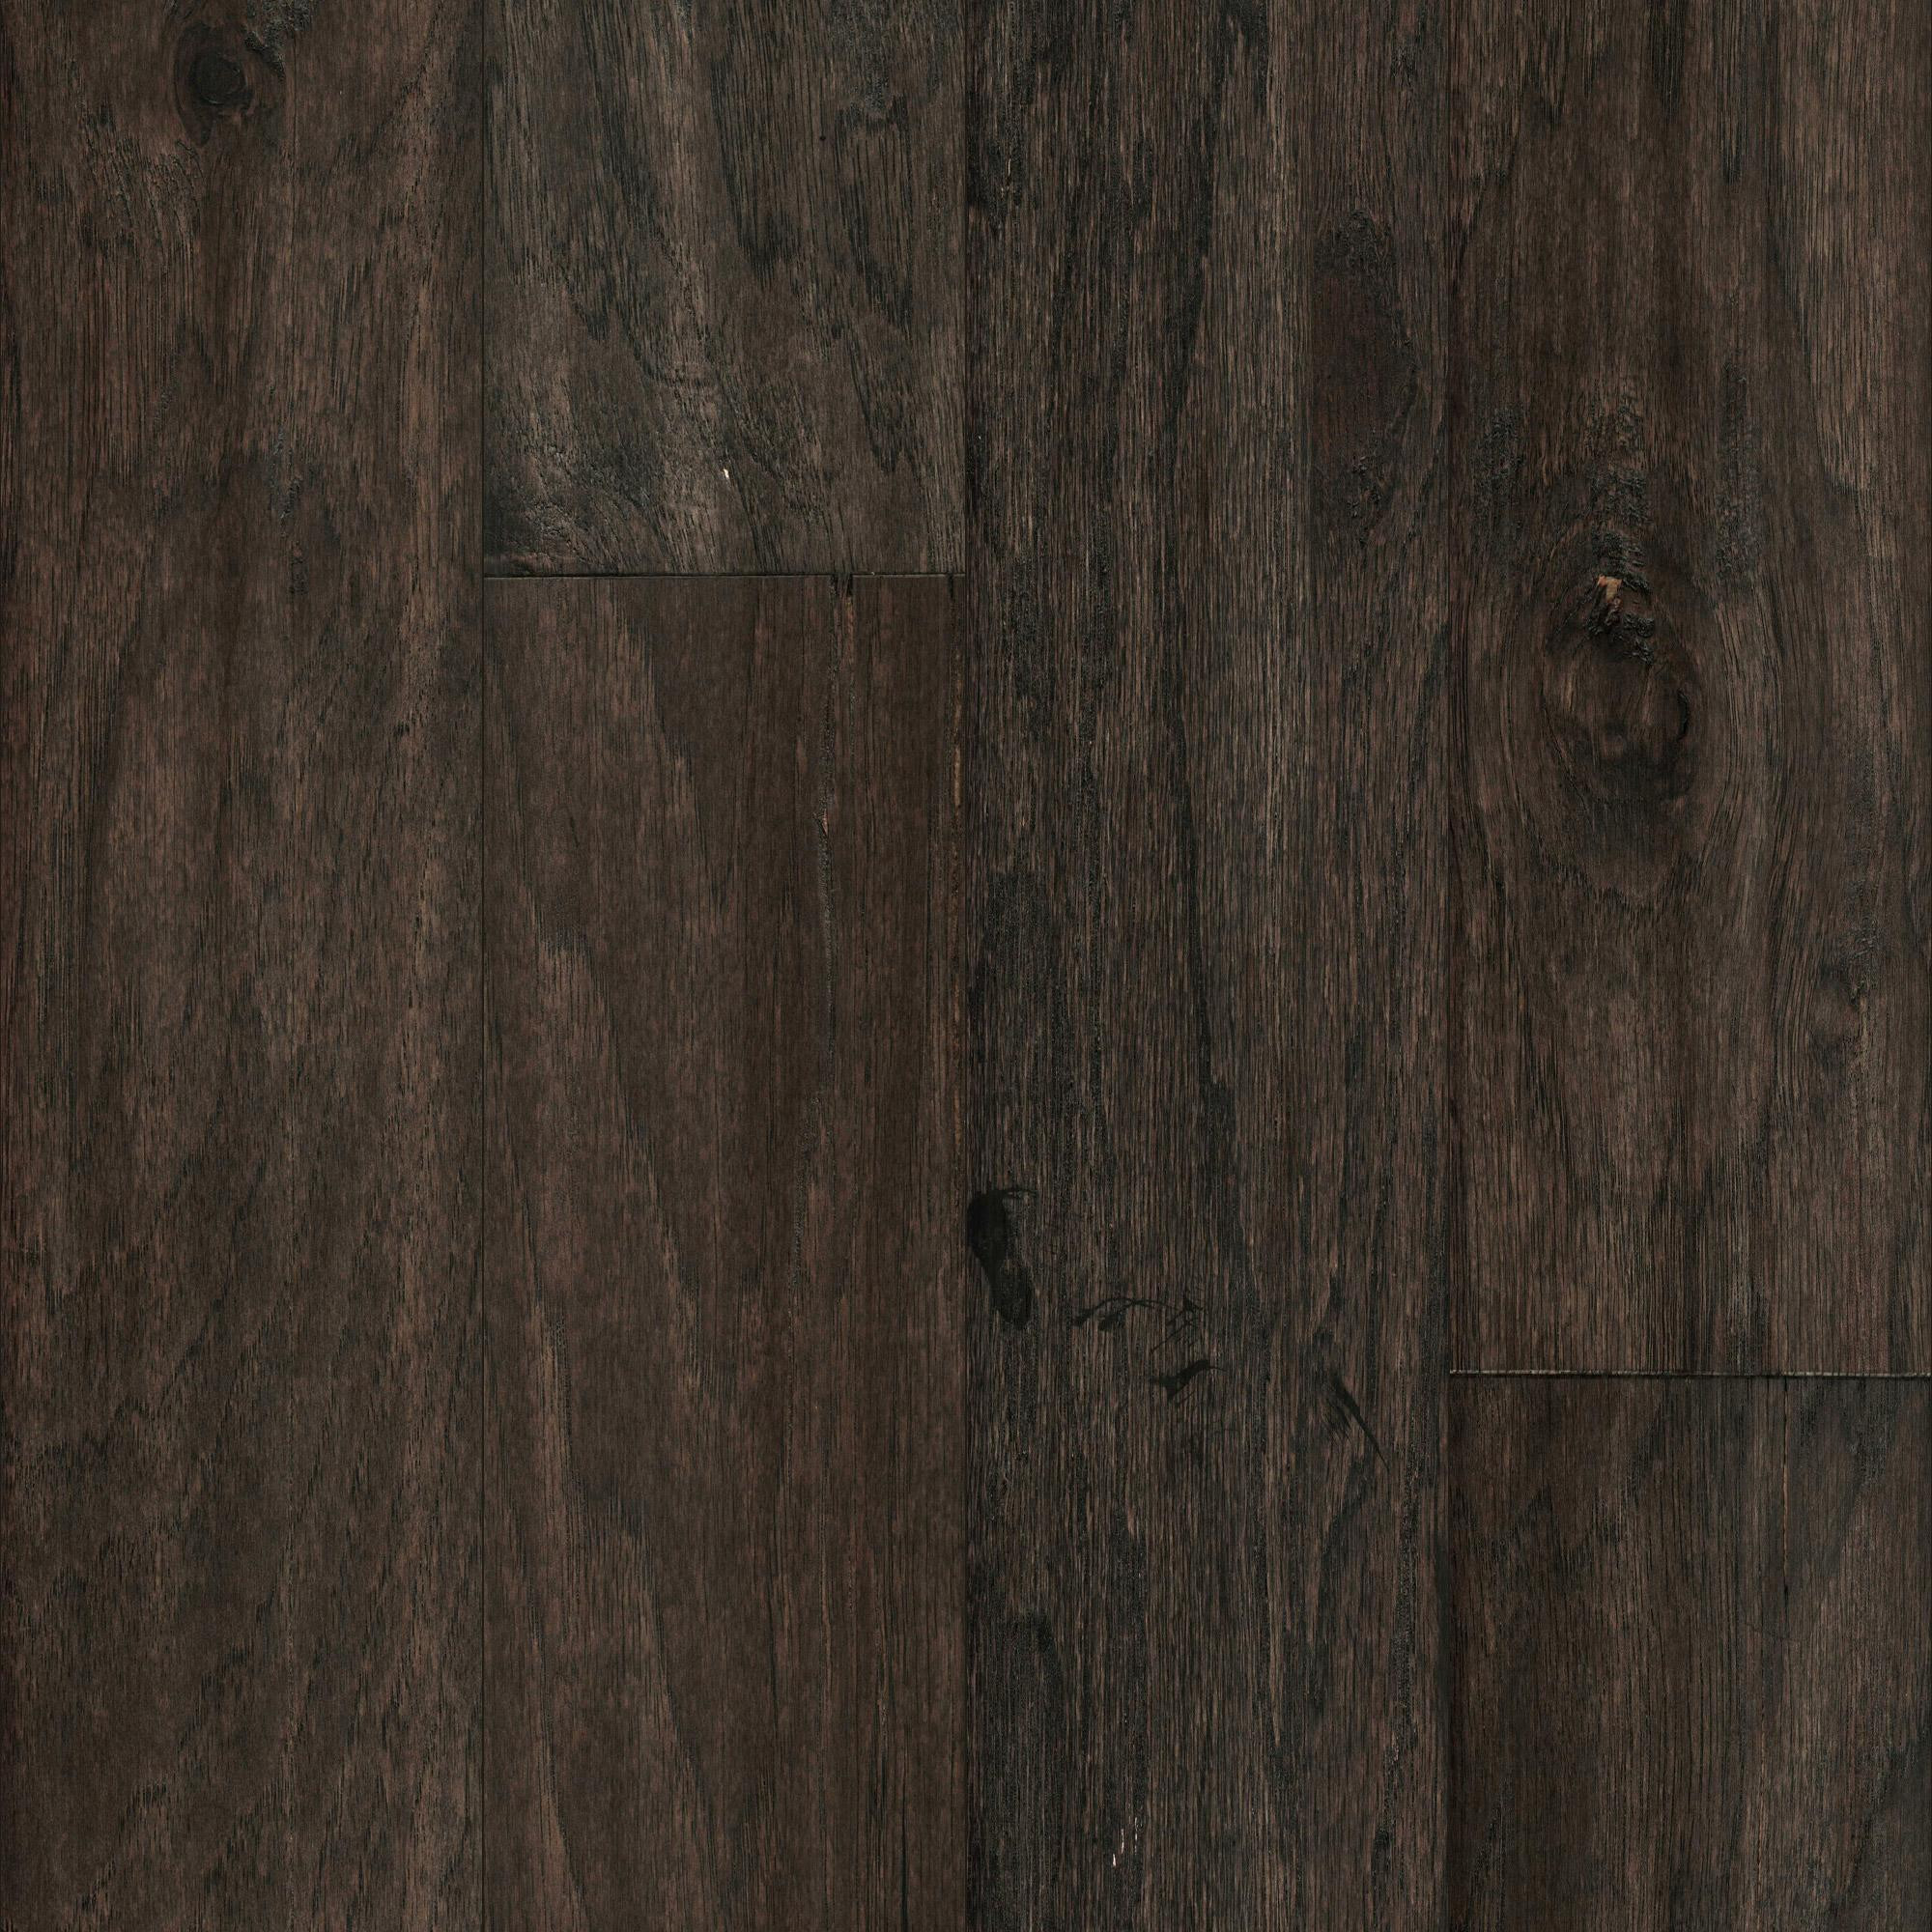 15 Lovable Hardwood Flooring Grey tones 2024 free download hardwood flooring grey tones of mullican lincolnshire sculpted hickory granite 5 engineered within mullican lincolnshire sculpted hickory granite 5 engineered hardwood flooring